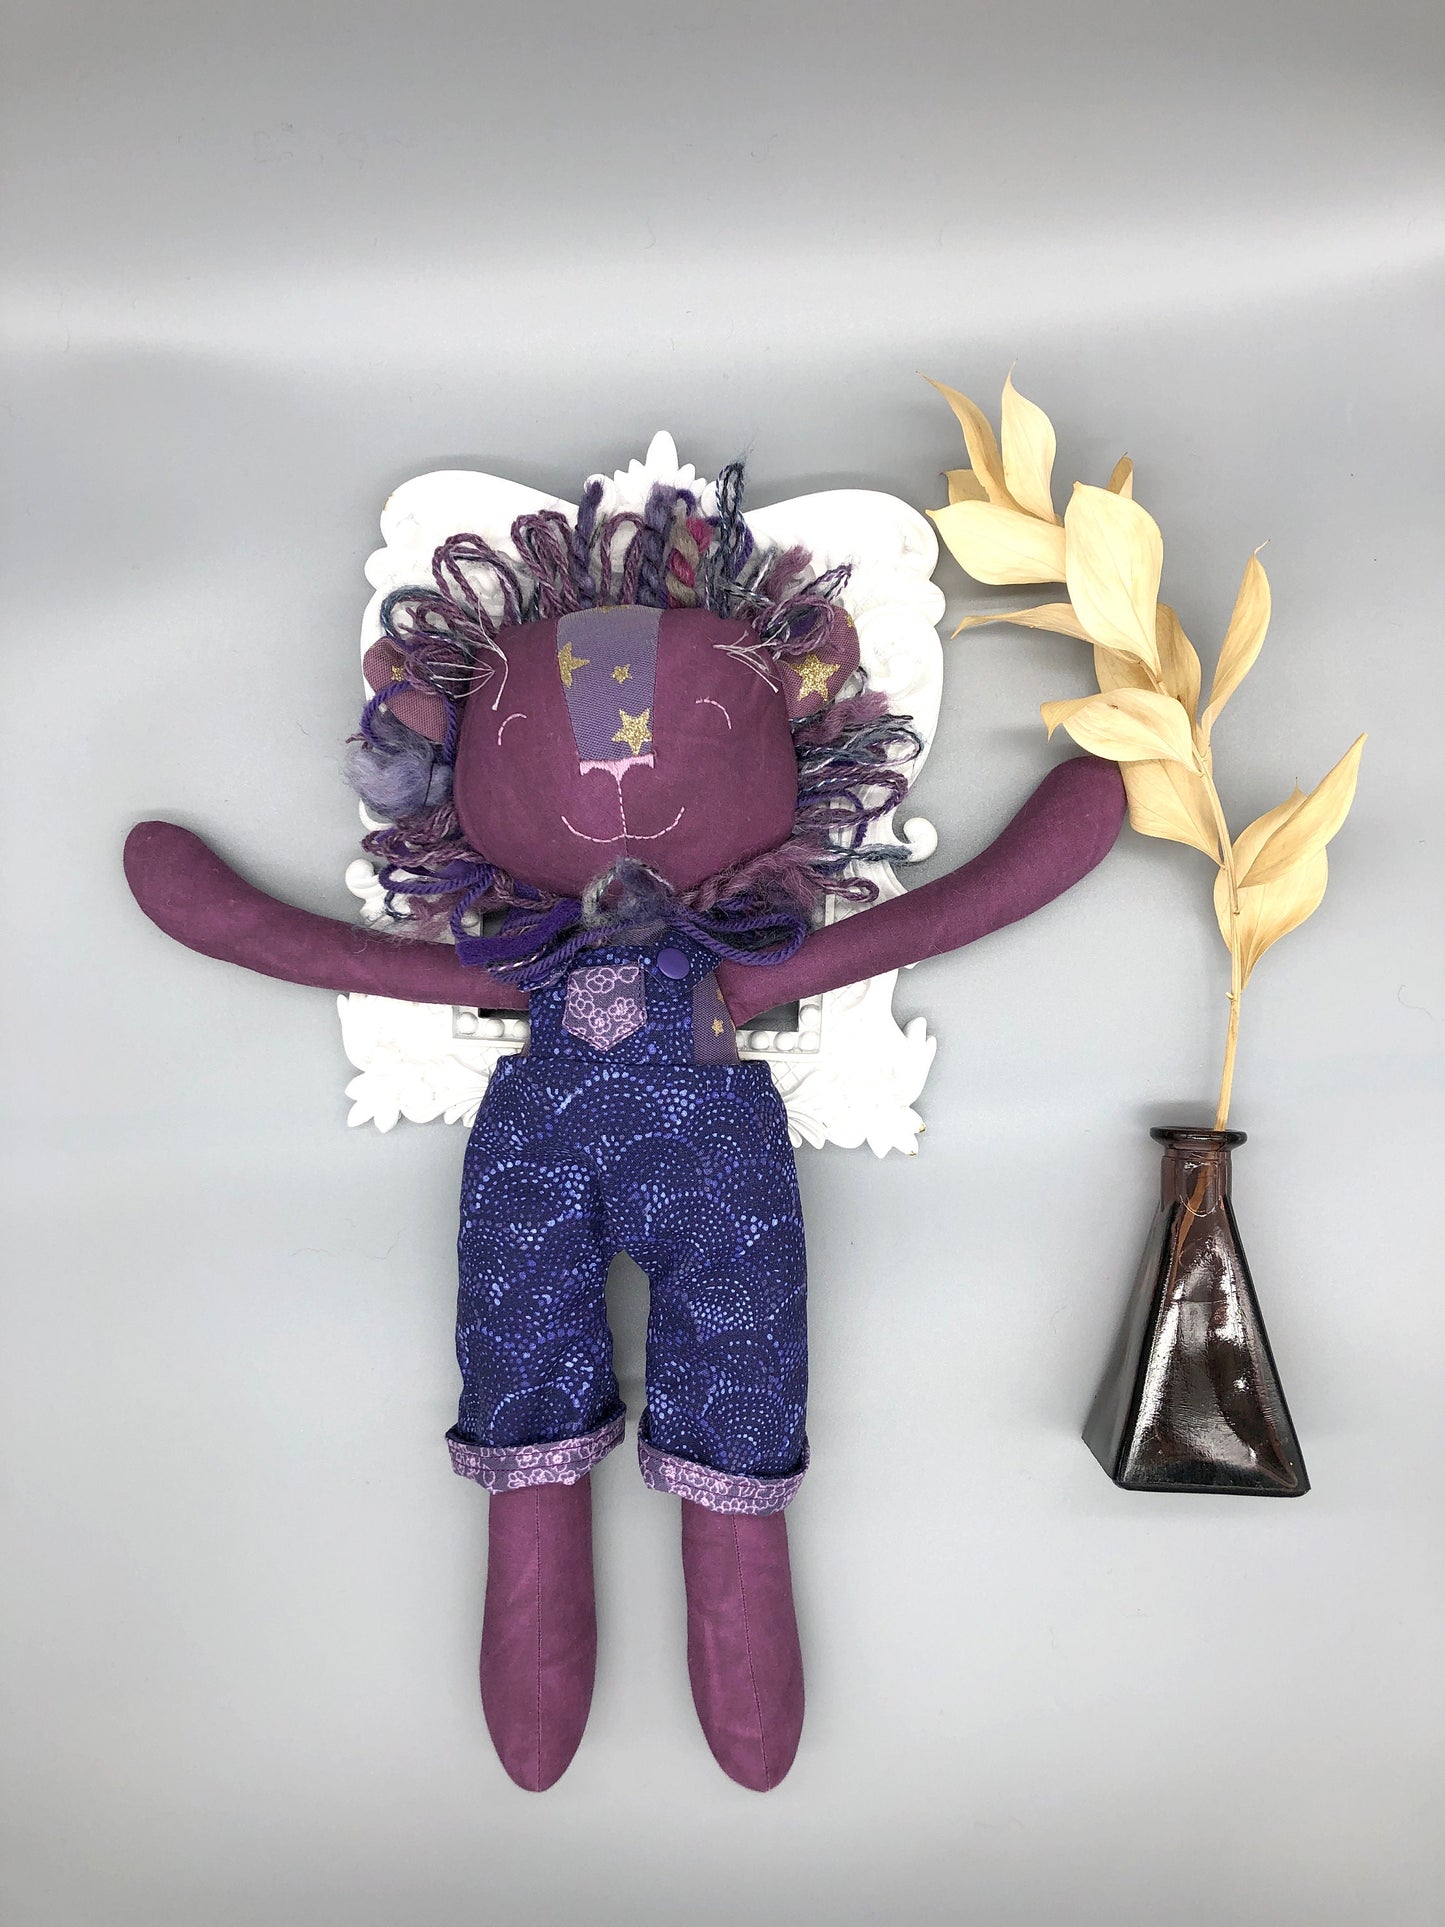 Reversible Handmade Lion Doll, "MELVIN", rag doll, lion doll, stuffed animal, stuffed lion, heirloom gift, purple, boy dolls, gift for kids